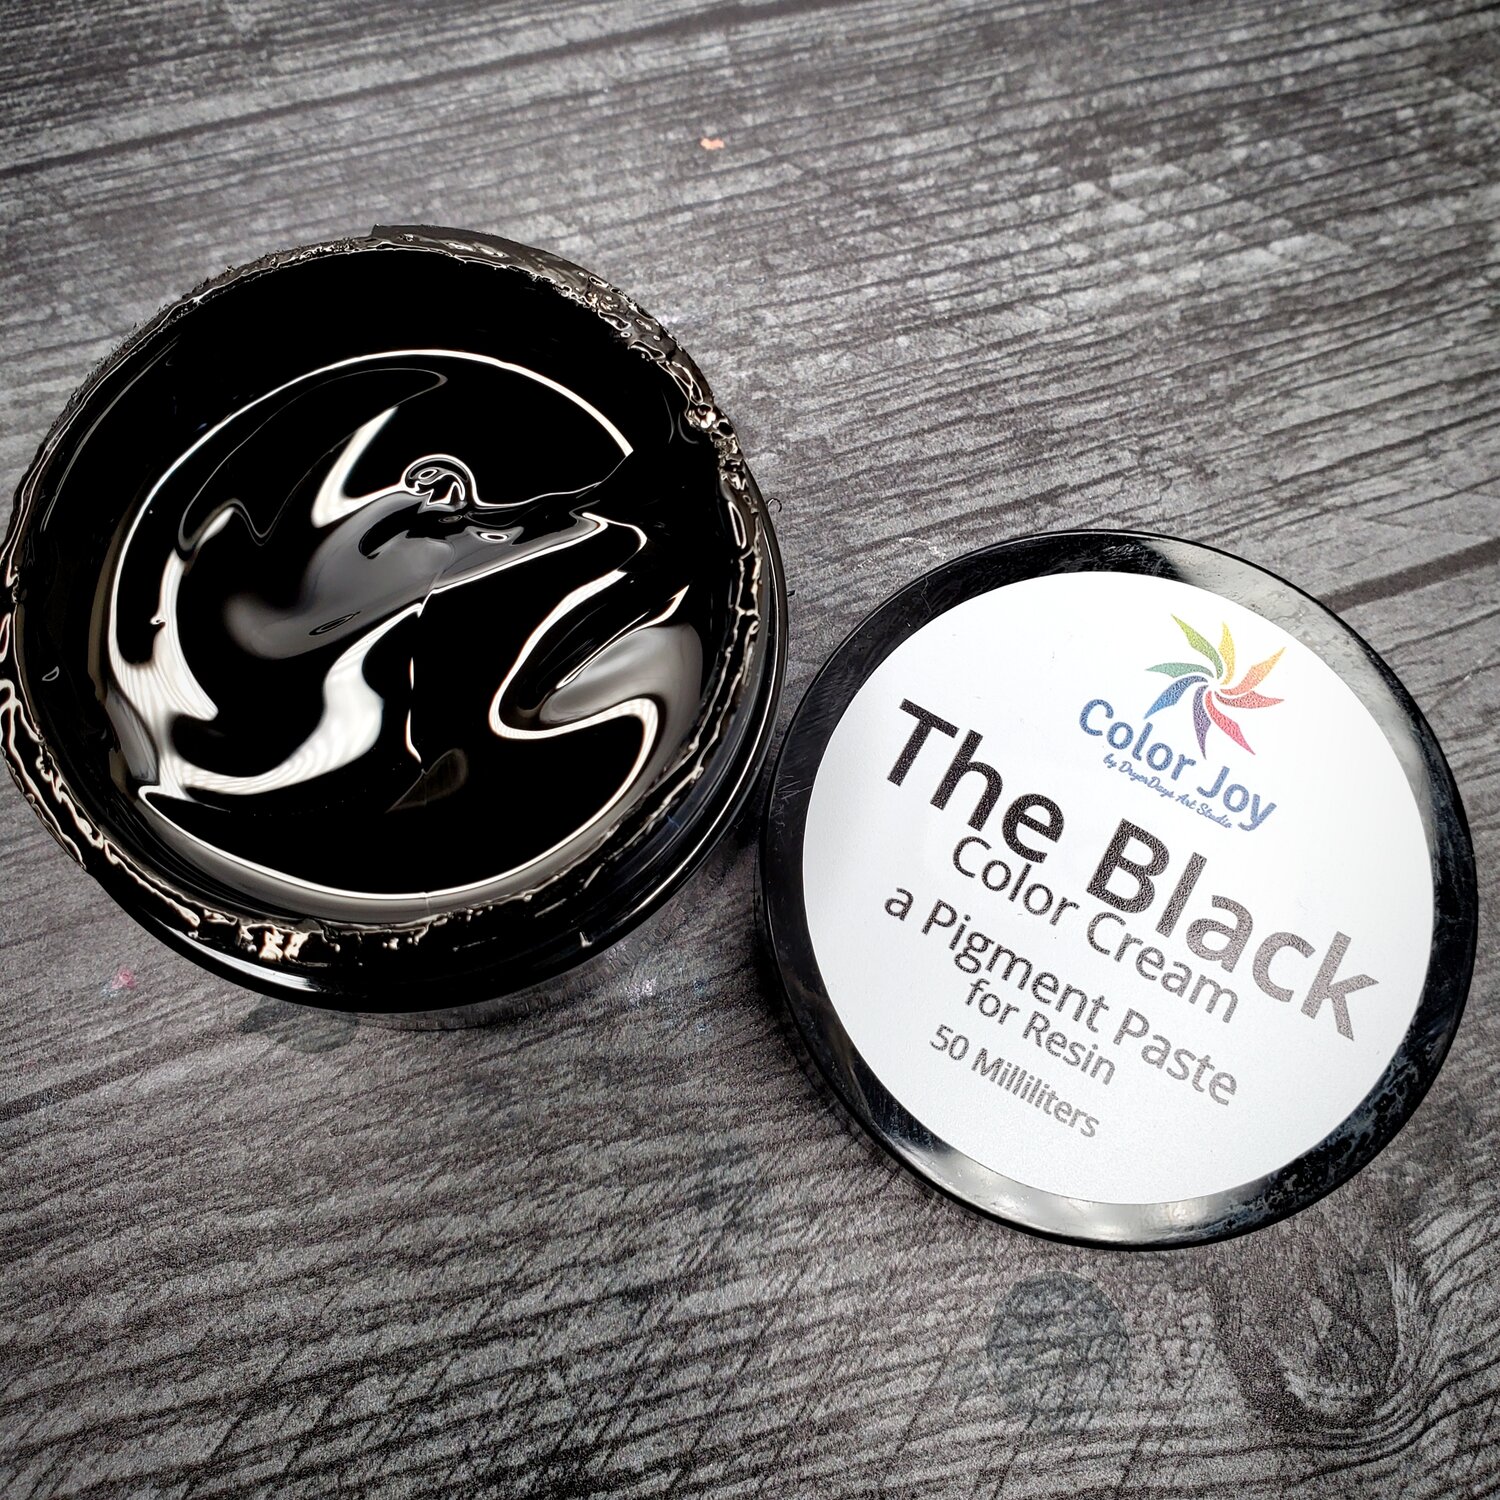 The Black Color Cream - Pigment Paste — Dryer Days